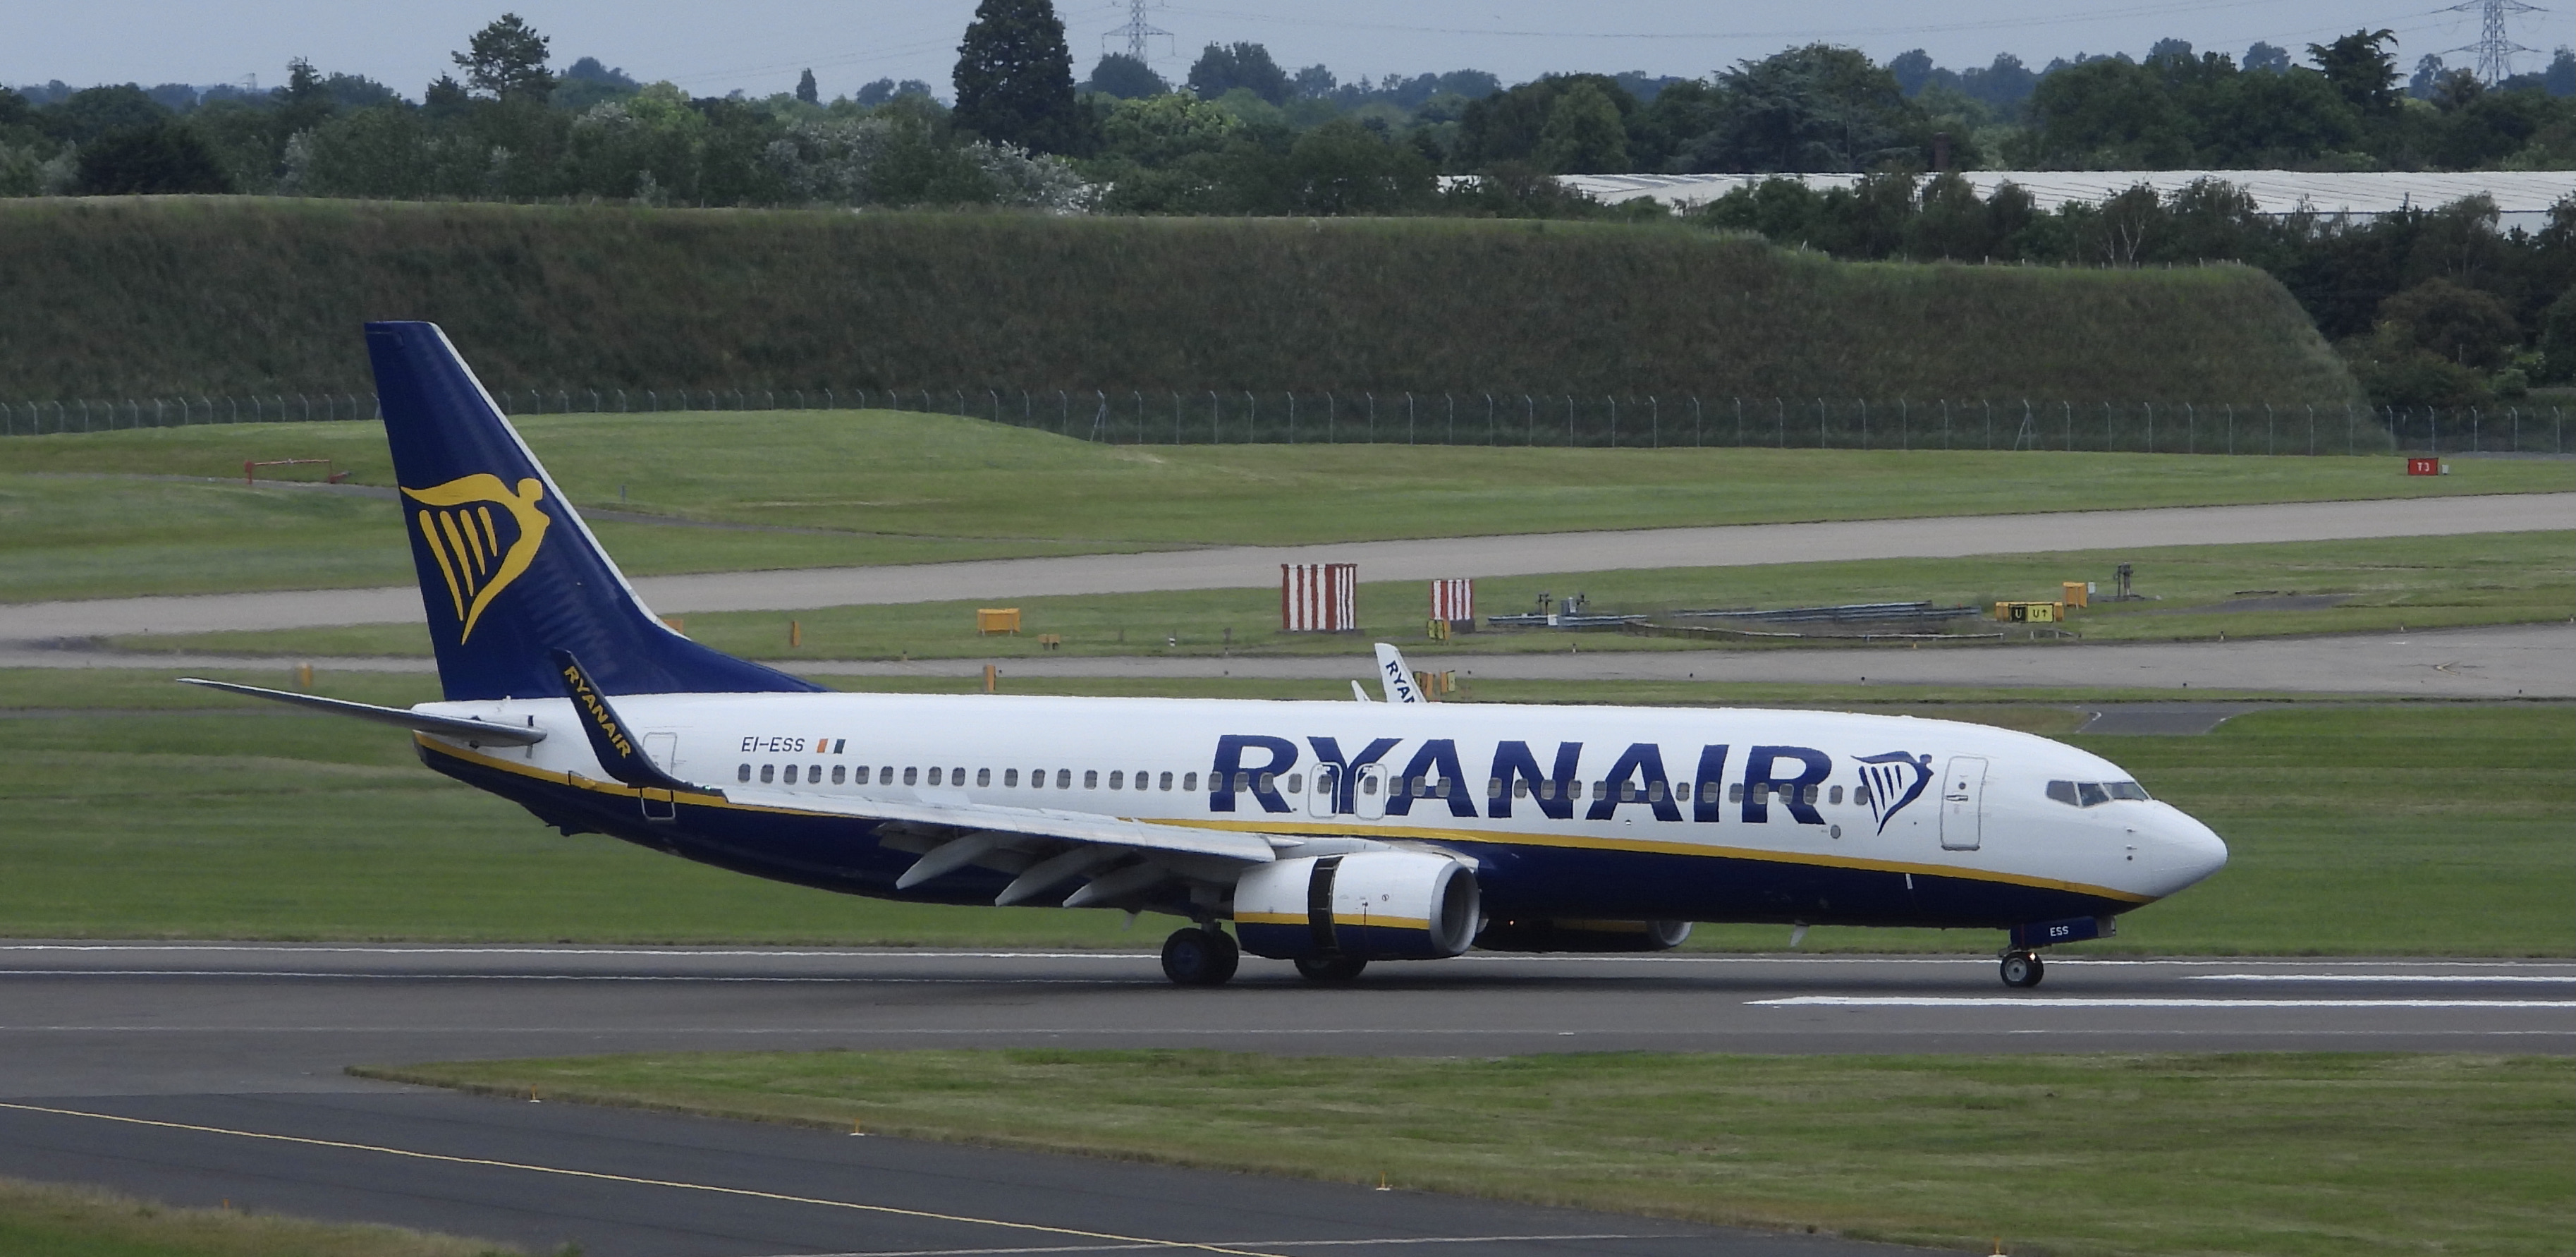 EI-ESS/EIESS Ryanair Boeing 737 NG Airframe Information - AVSpotters.com